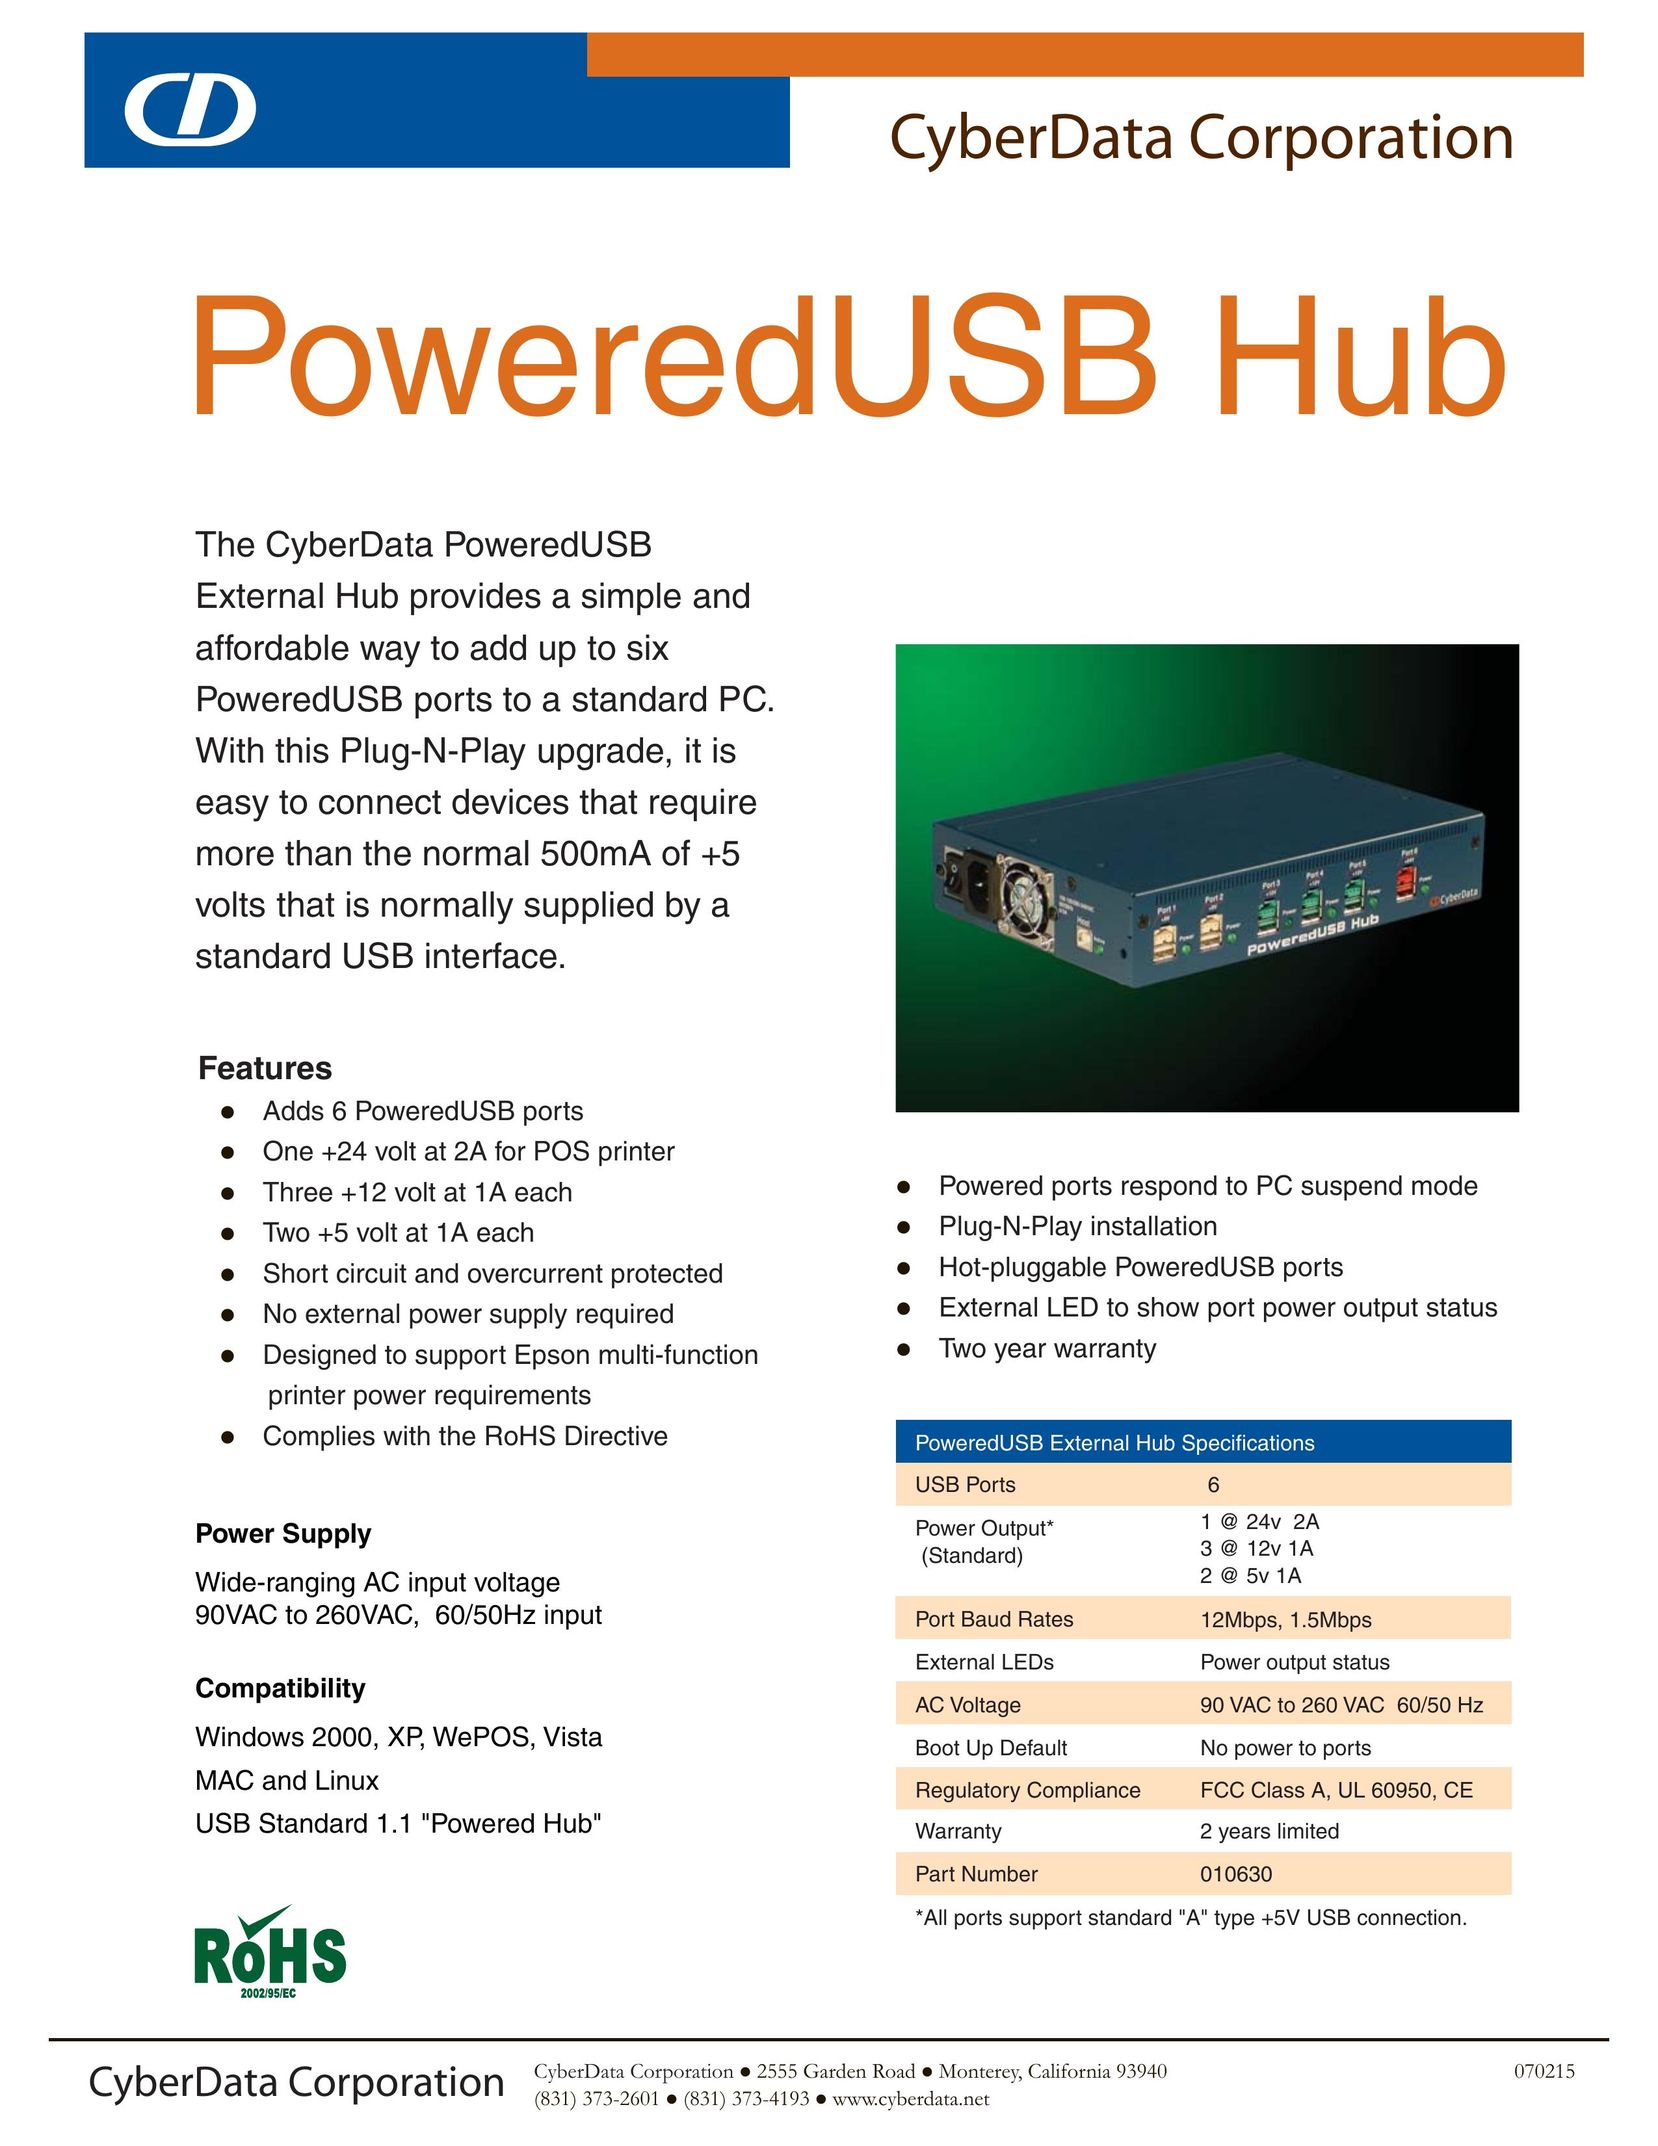 CyberData PoweredUSB Hub Switch User Manual